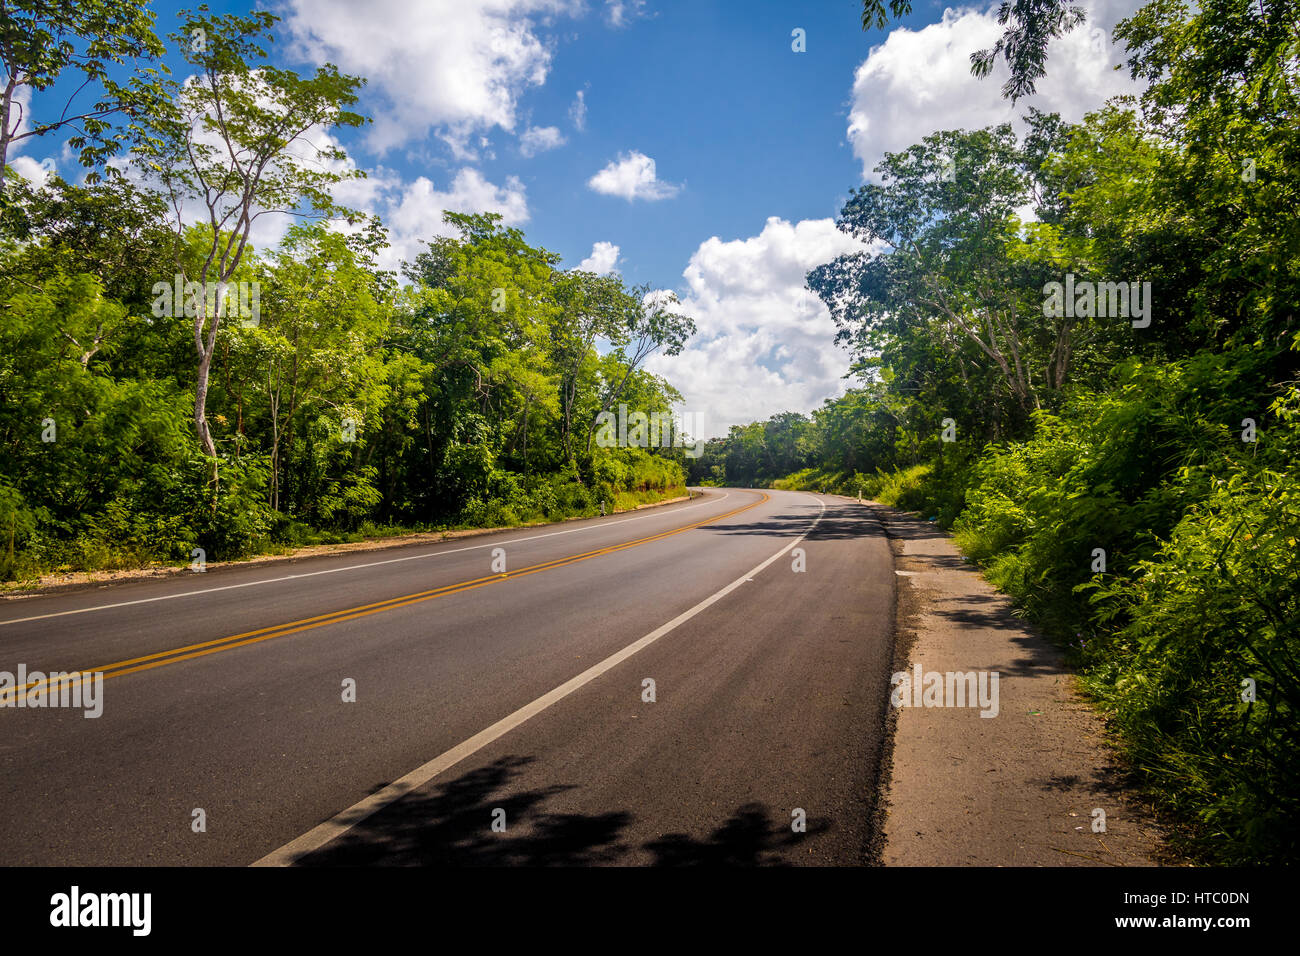 Asphaltierte Straße im grünen Wald - Yucatan, Mexiko Stockfoto